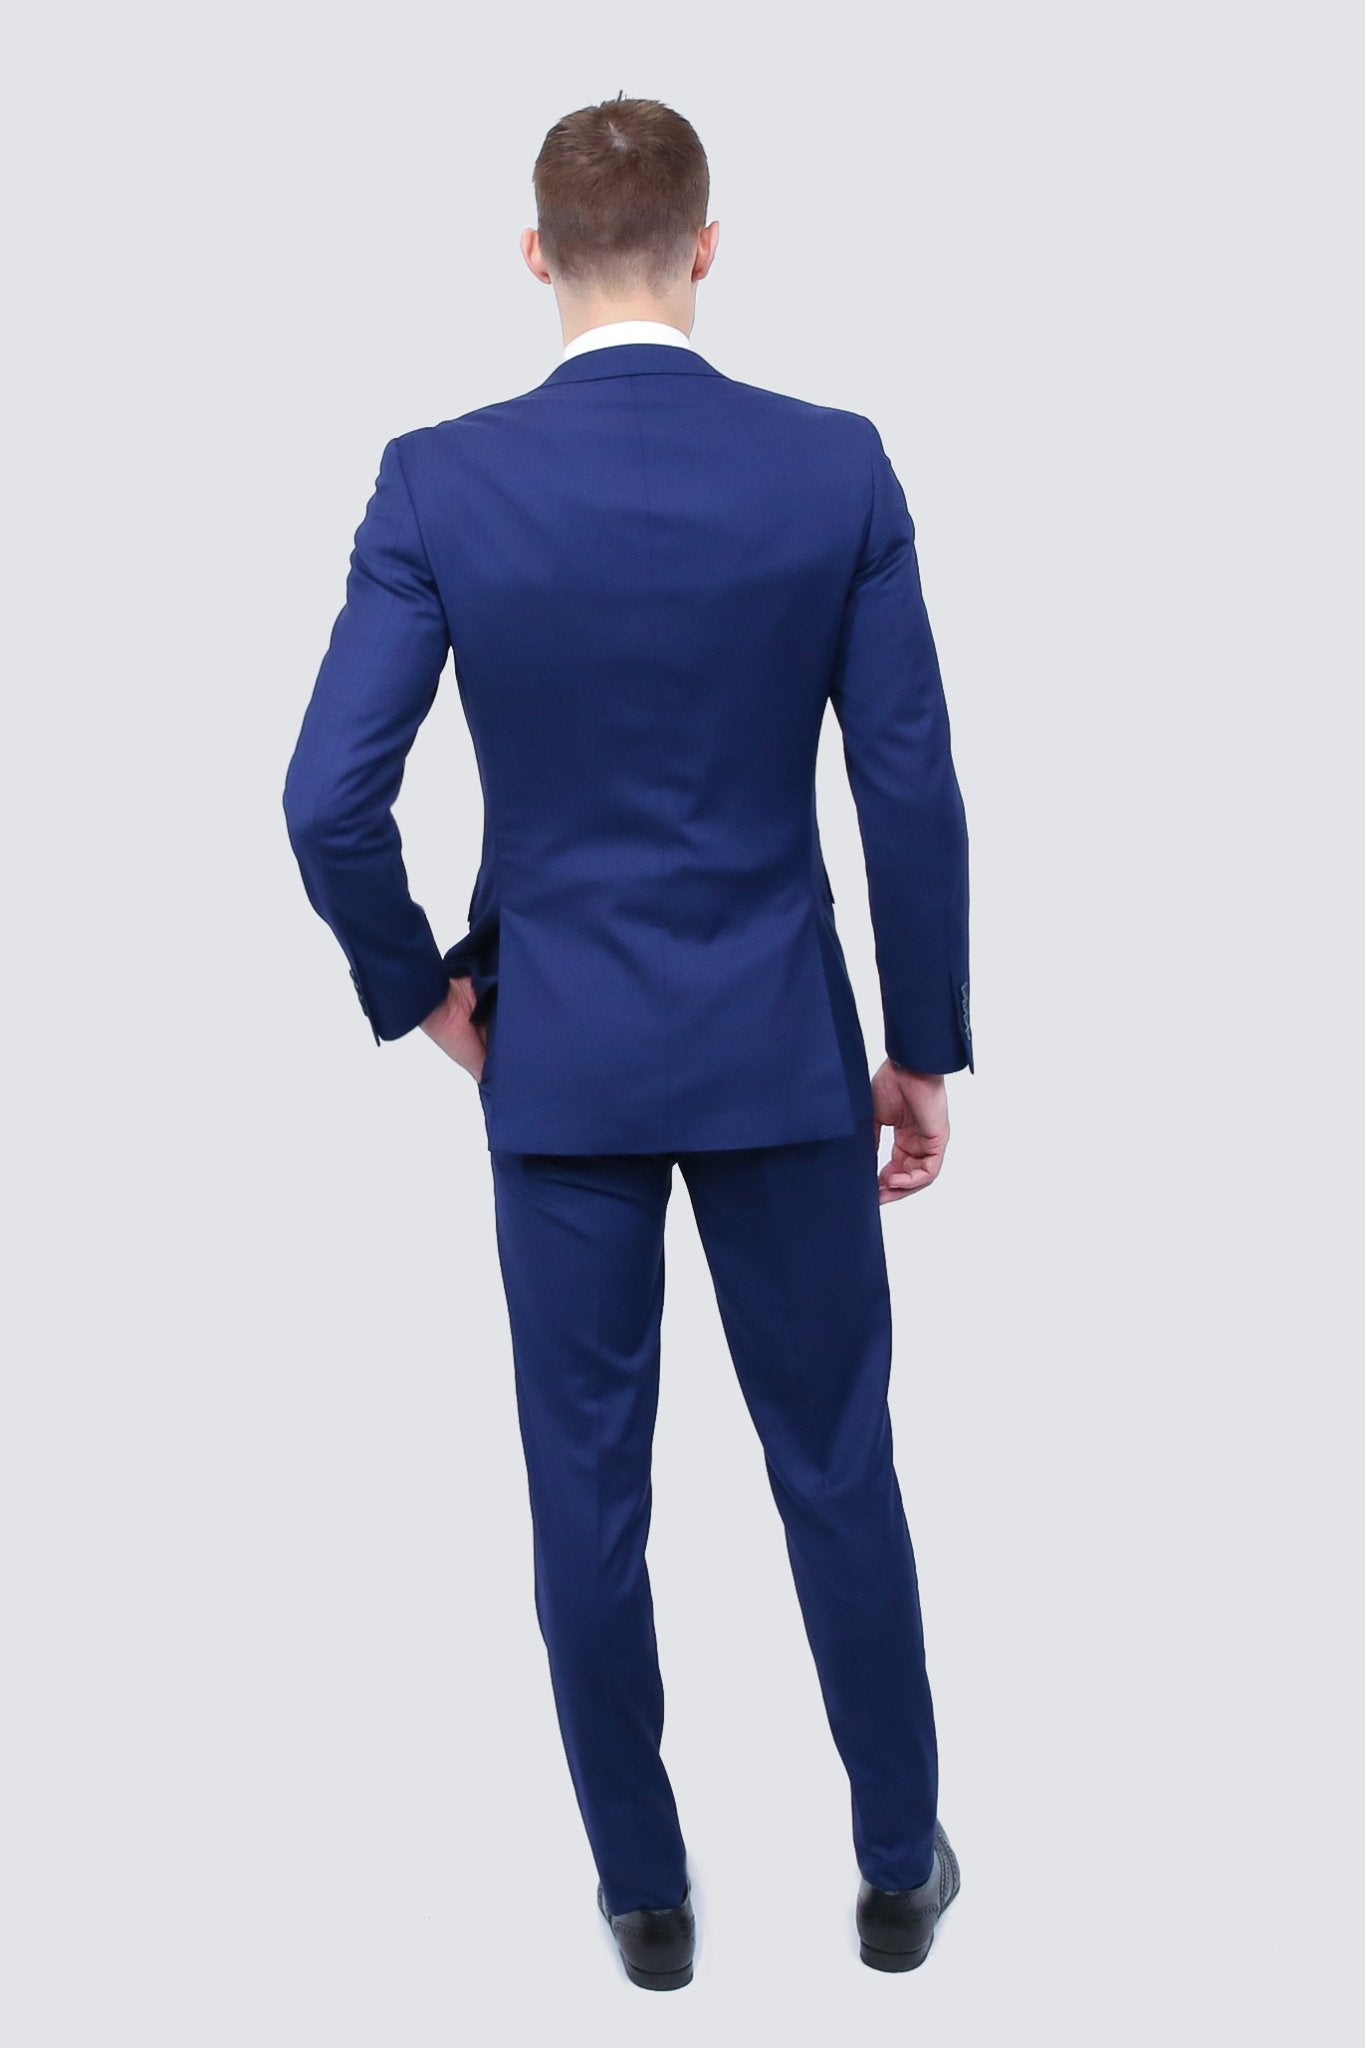 Tailor's Stretch Azzure Blue Suit | Slim or Modern Fit - My Men's Shop